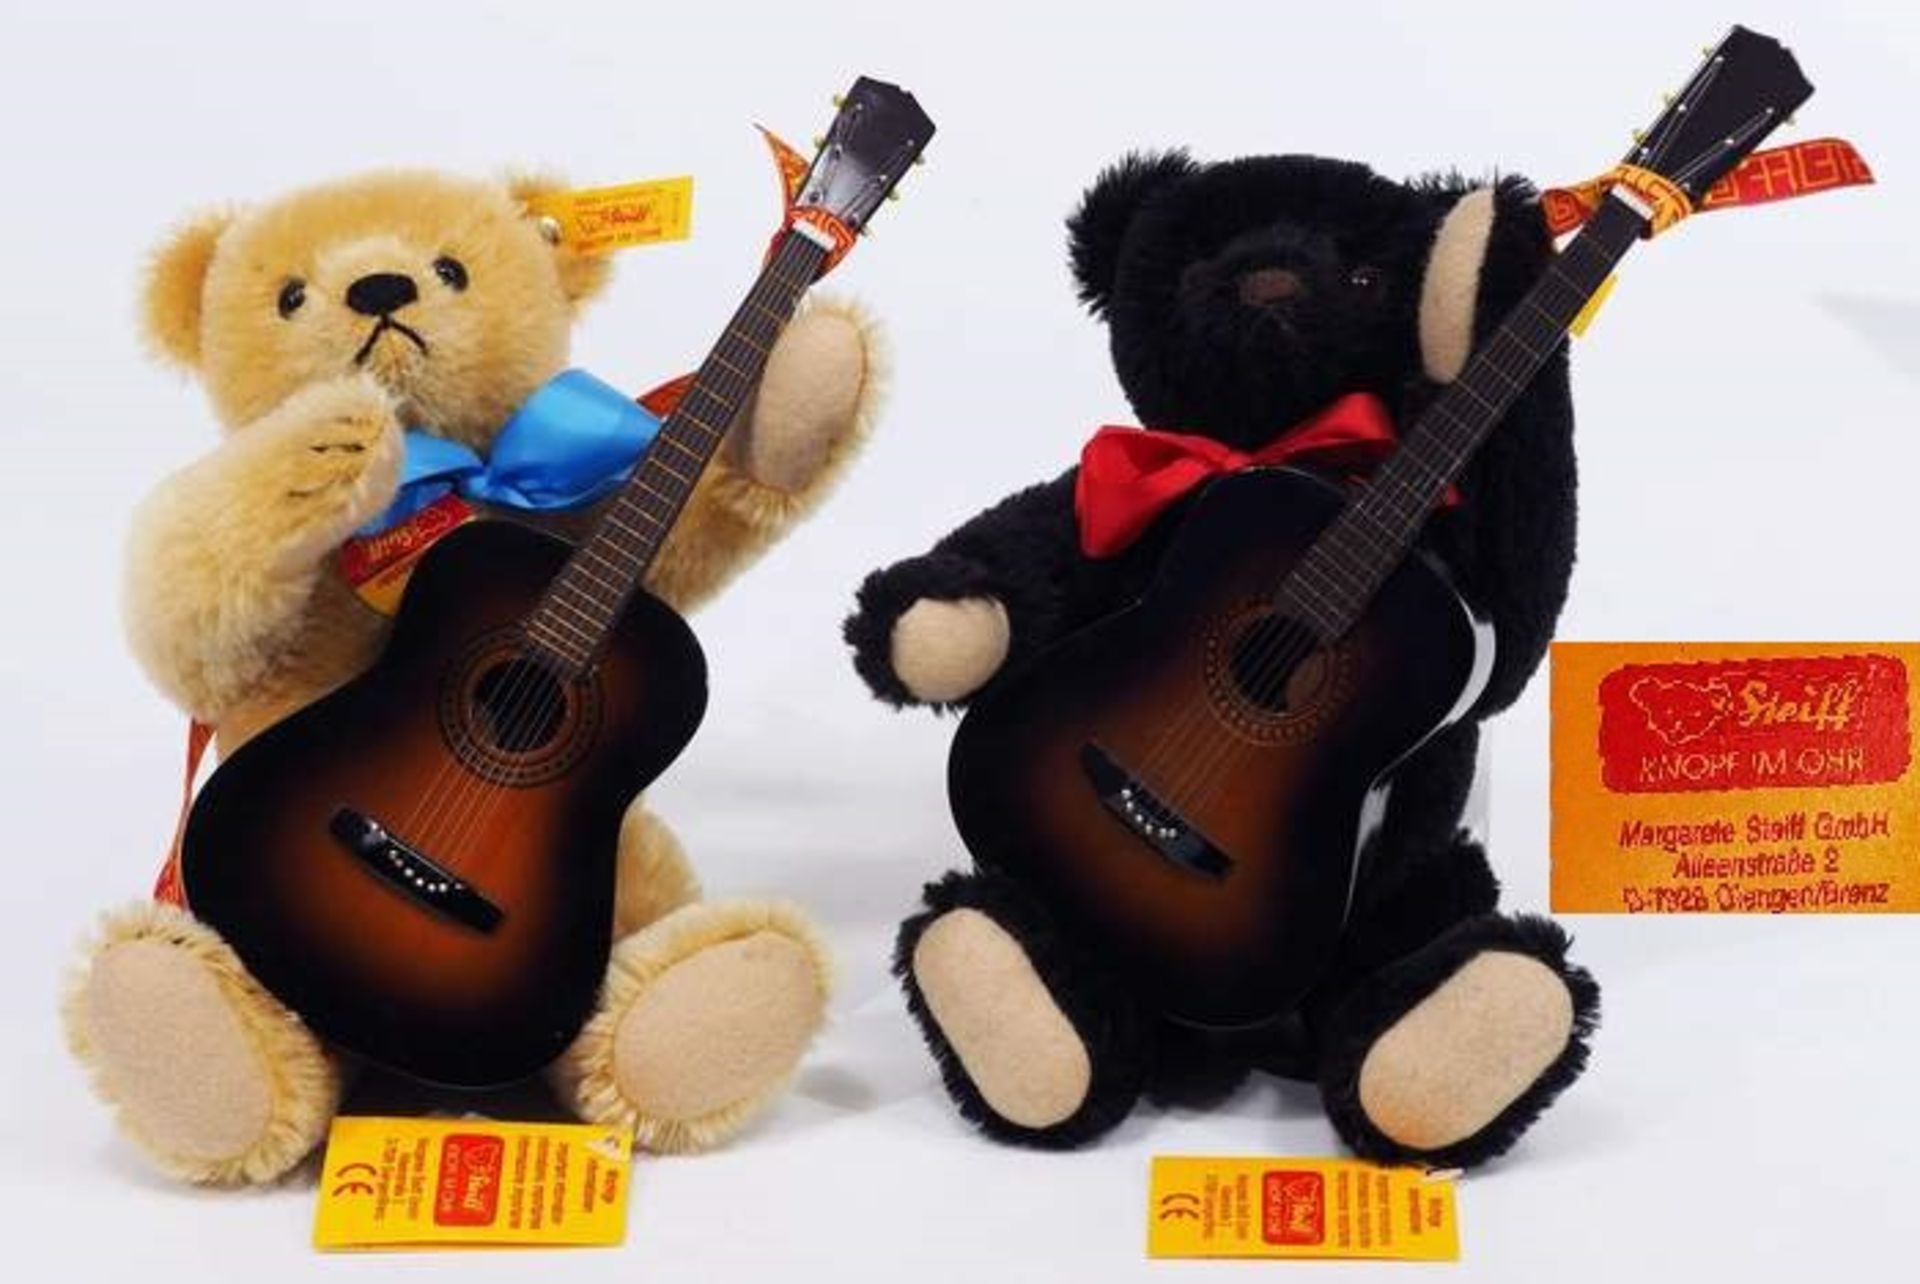 Zwei Steiff-Musik-Teddybären Bobby in schwarz und Billy in blond. Zwei Steiff-Musik-Teddybären Bobby